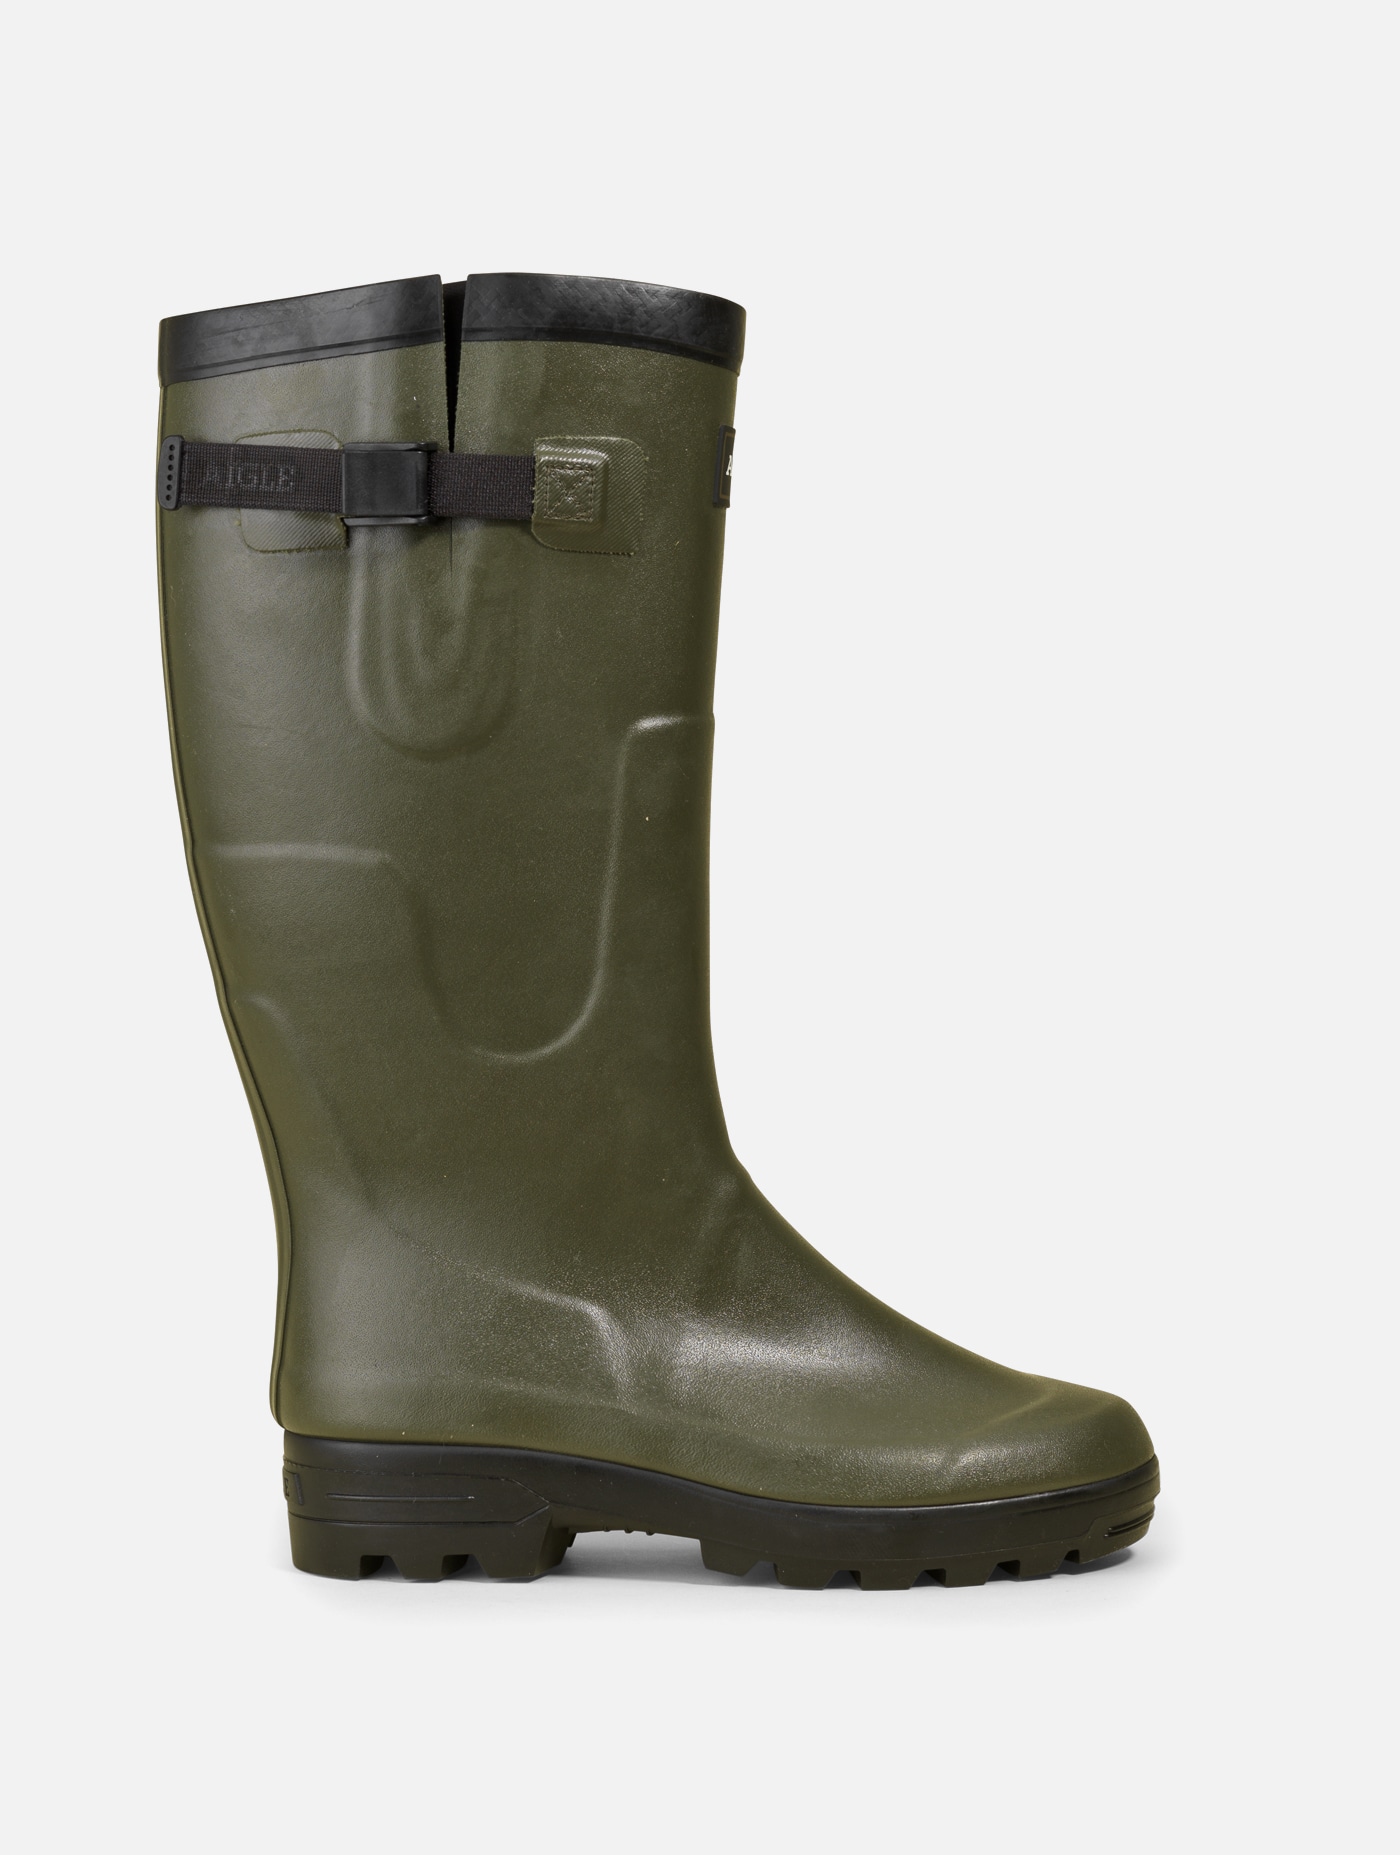 at donere Hverdage album Aigle - Men's insulating hunting boots Kaki - Benyl iso variomen | AIGLE